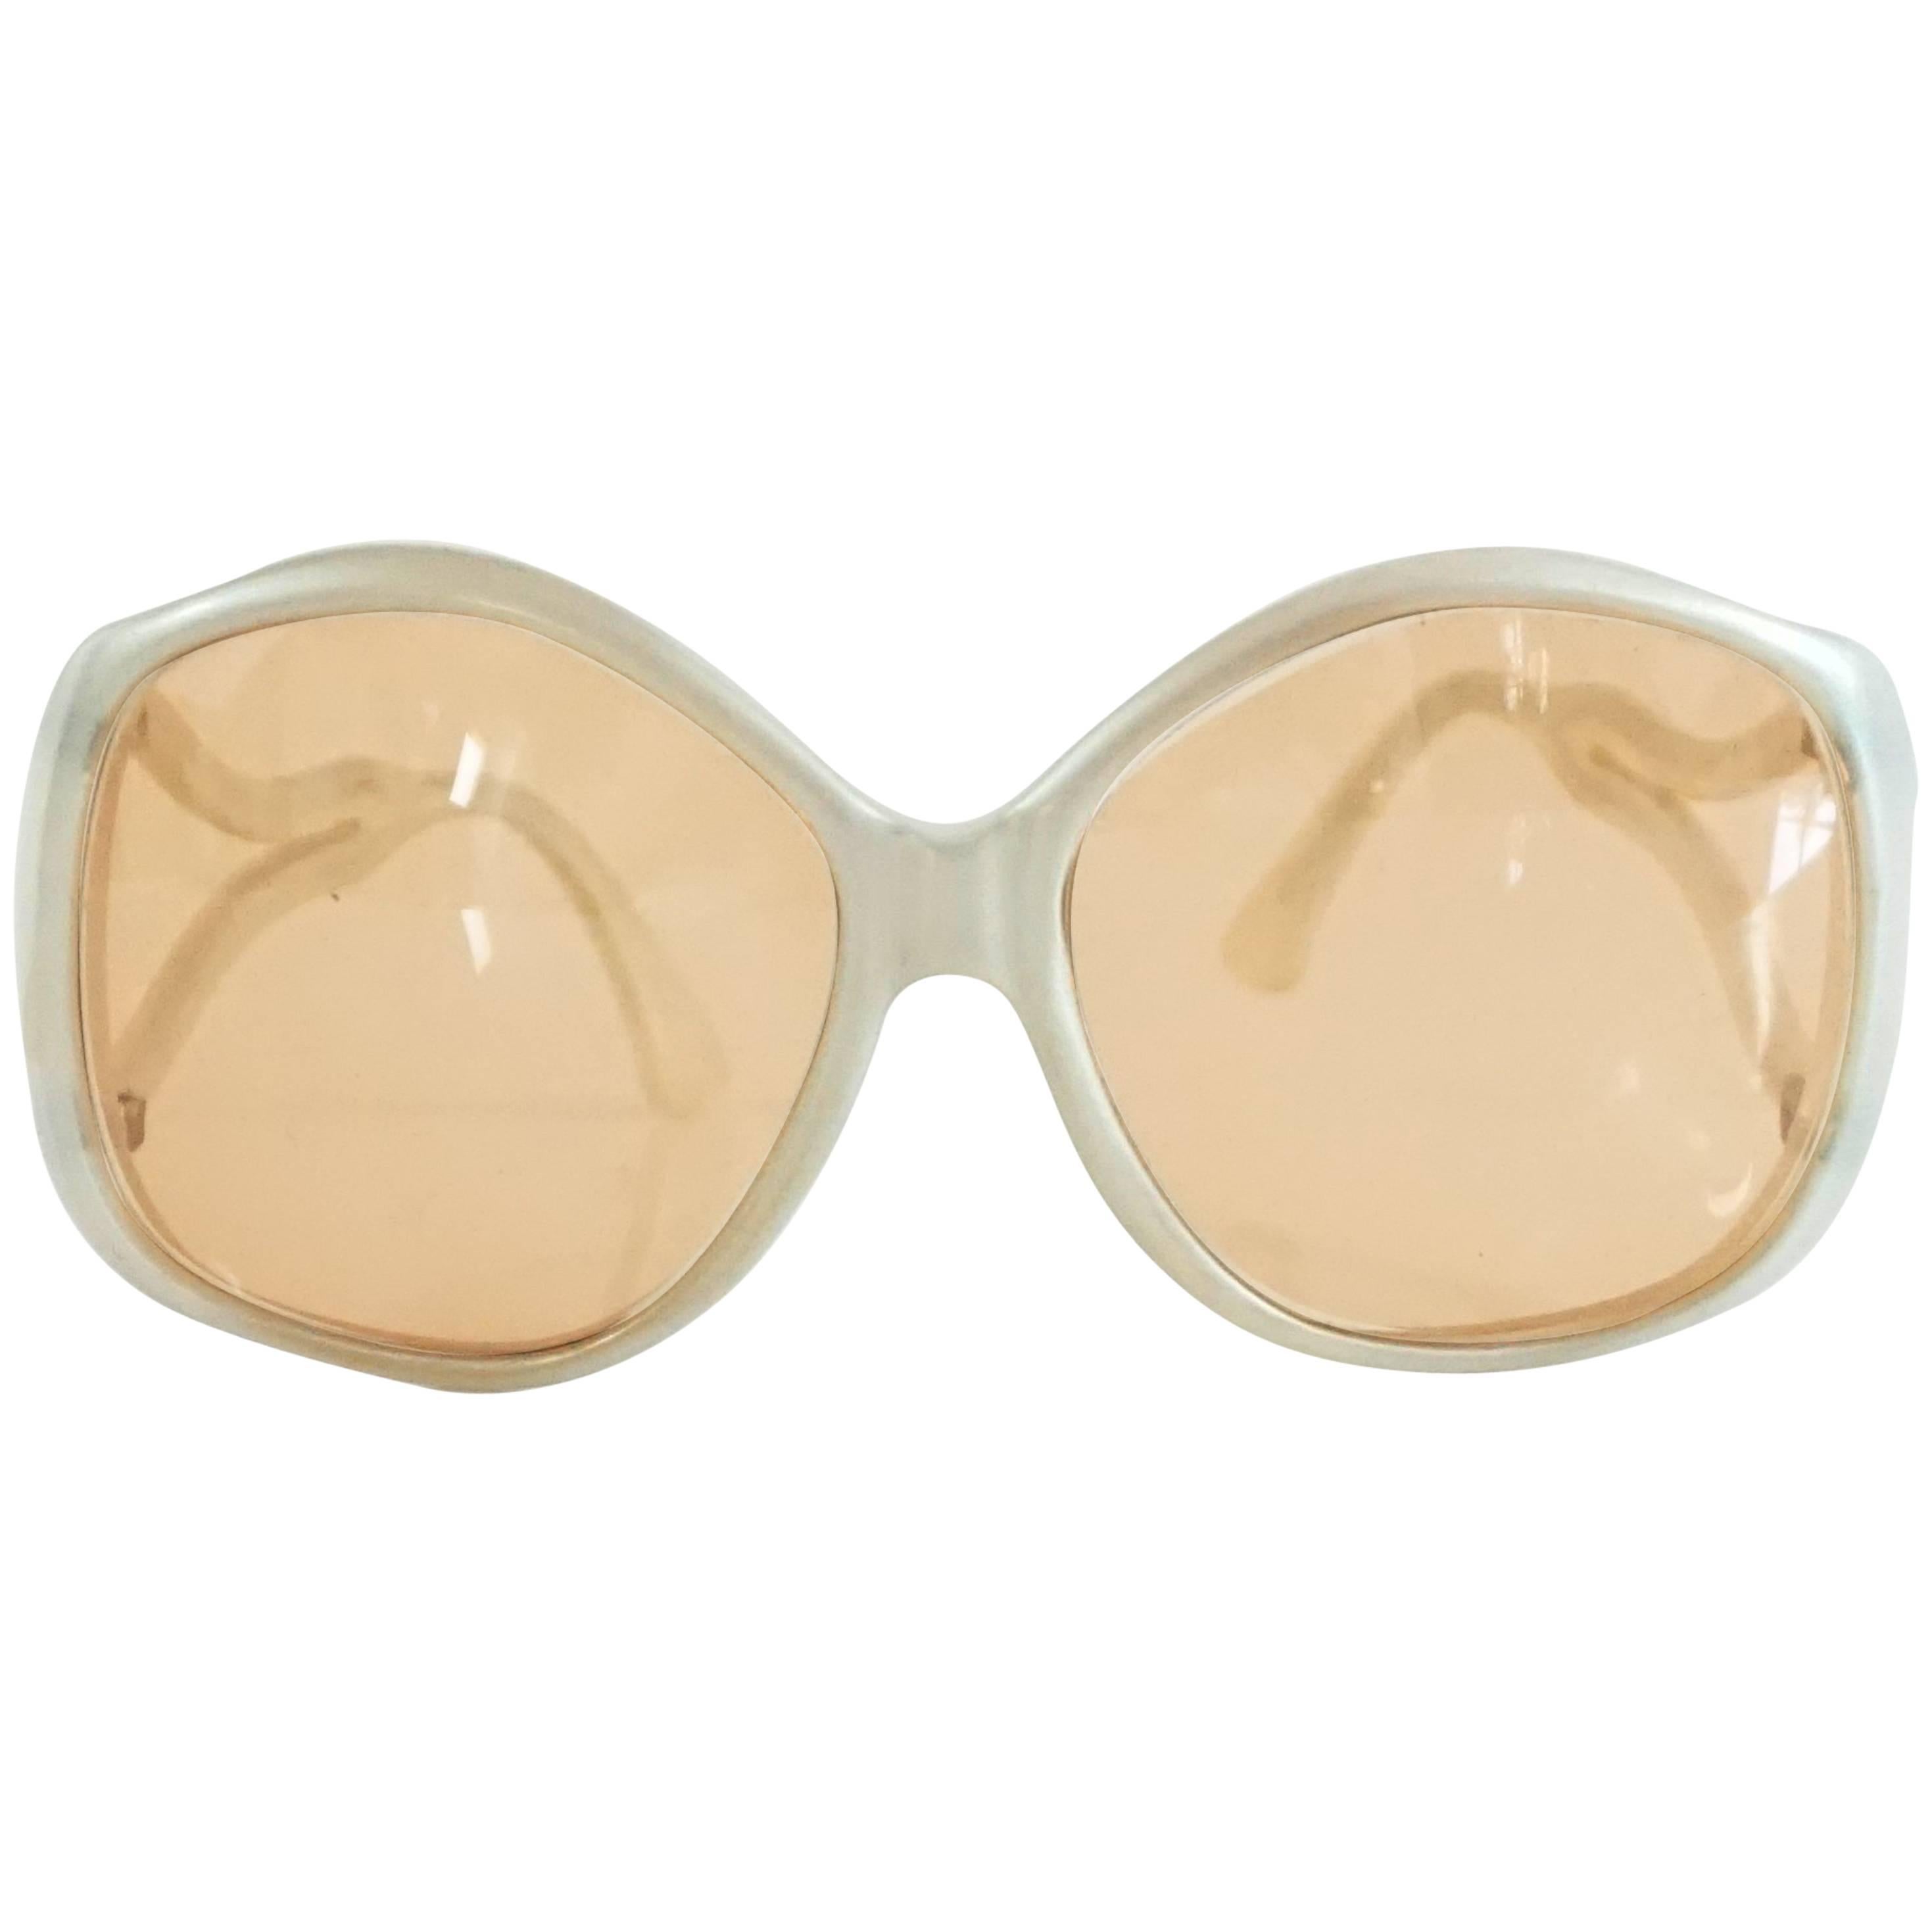 Diane von Furstenberg Large White Sunglasses - Circa 1970's